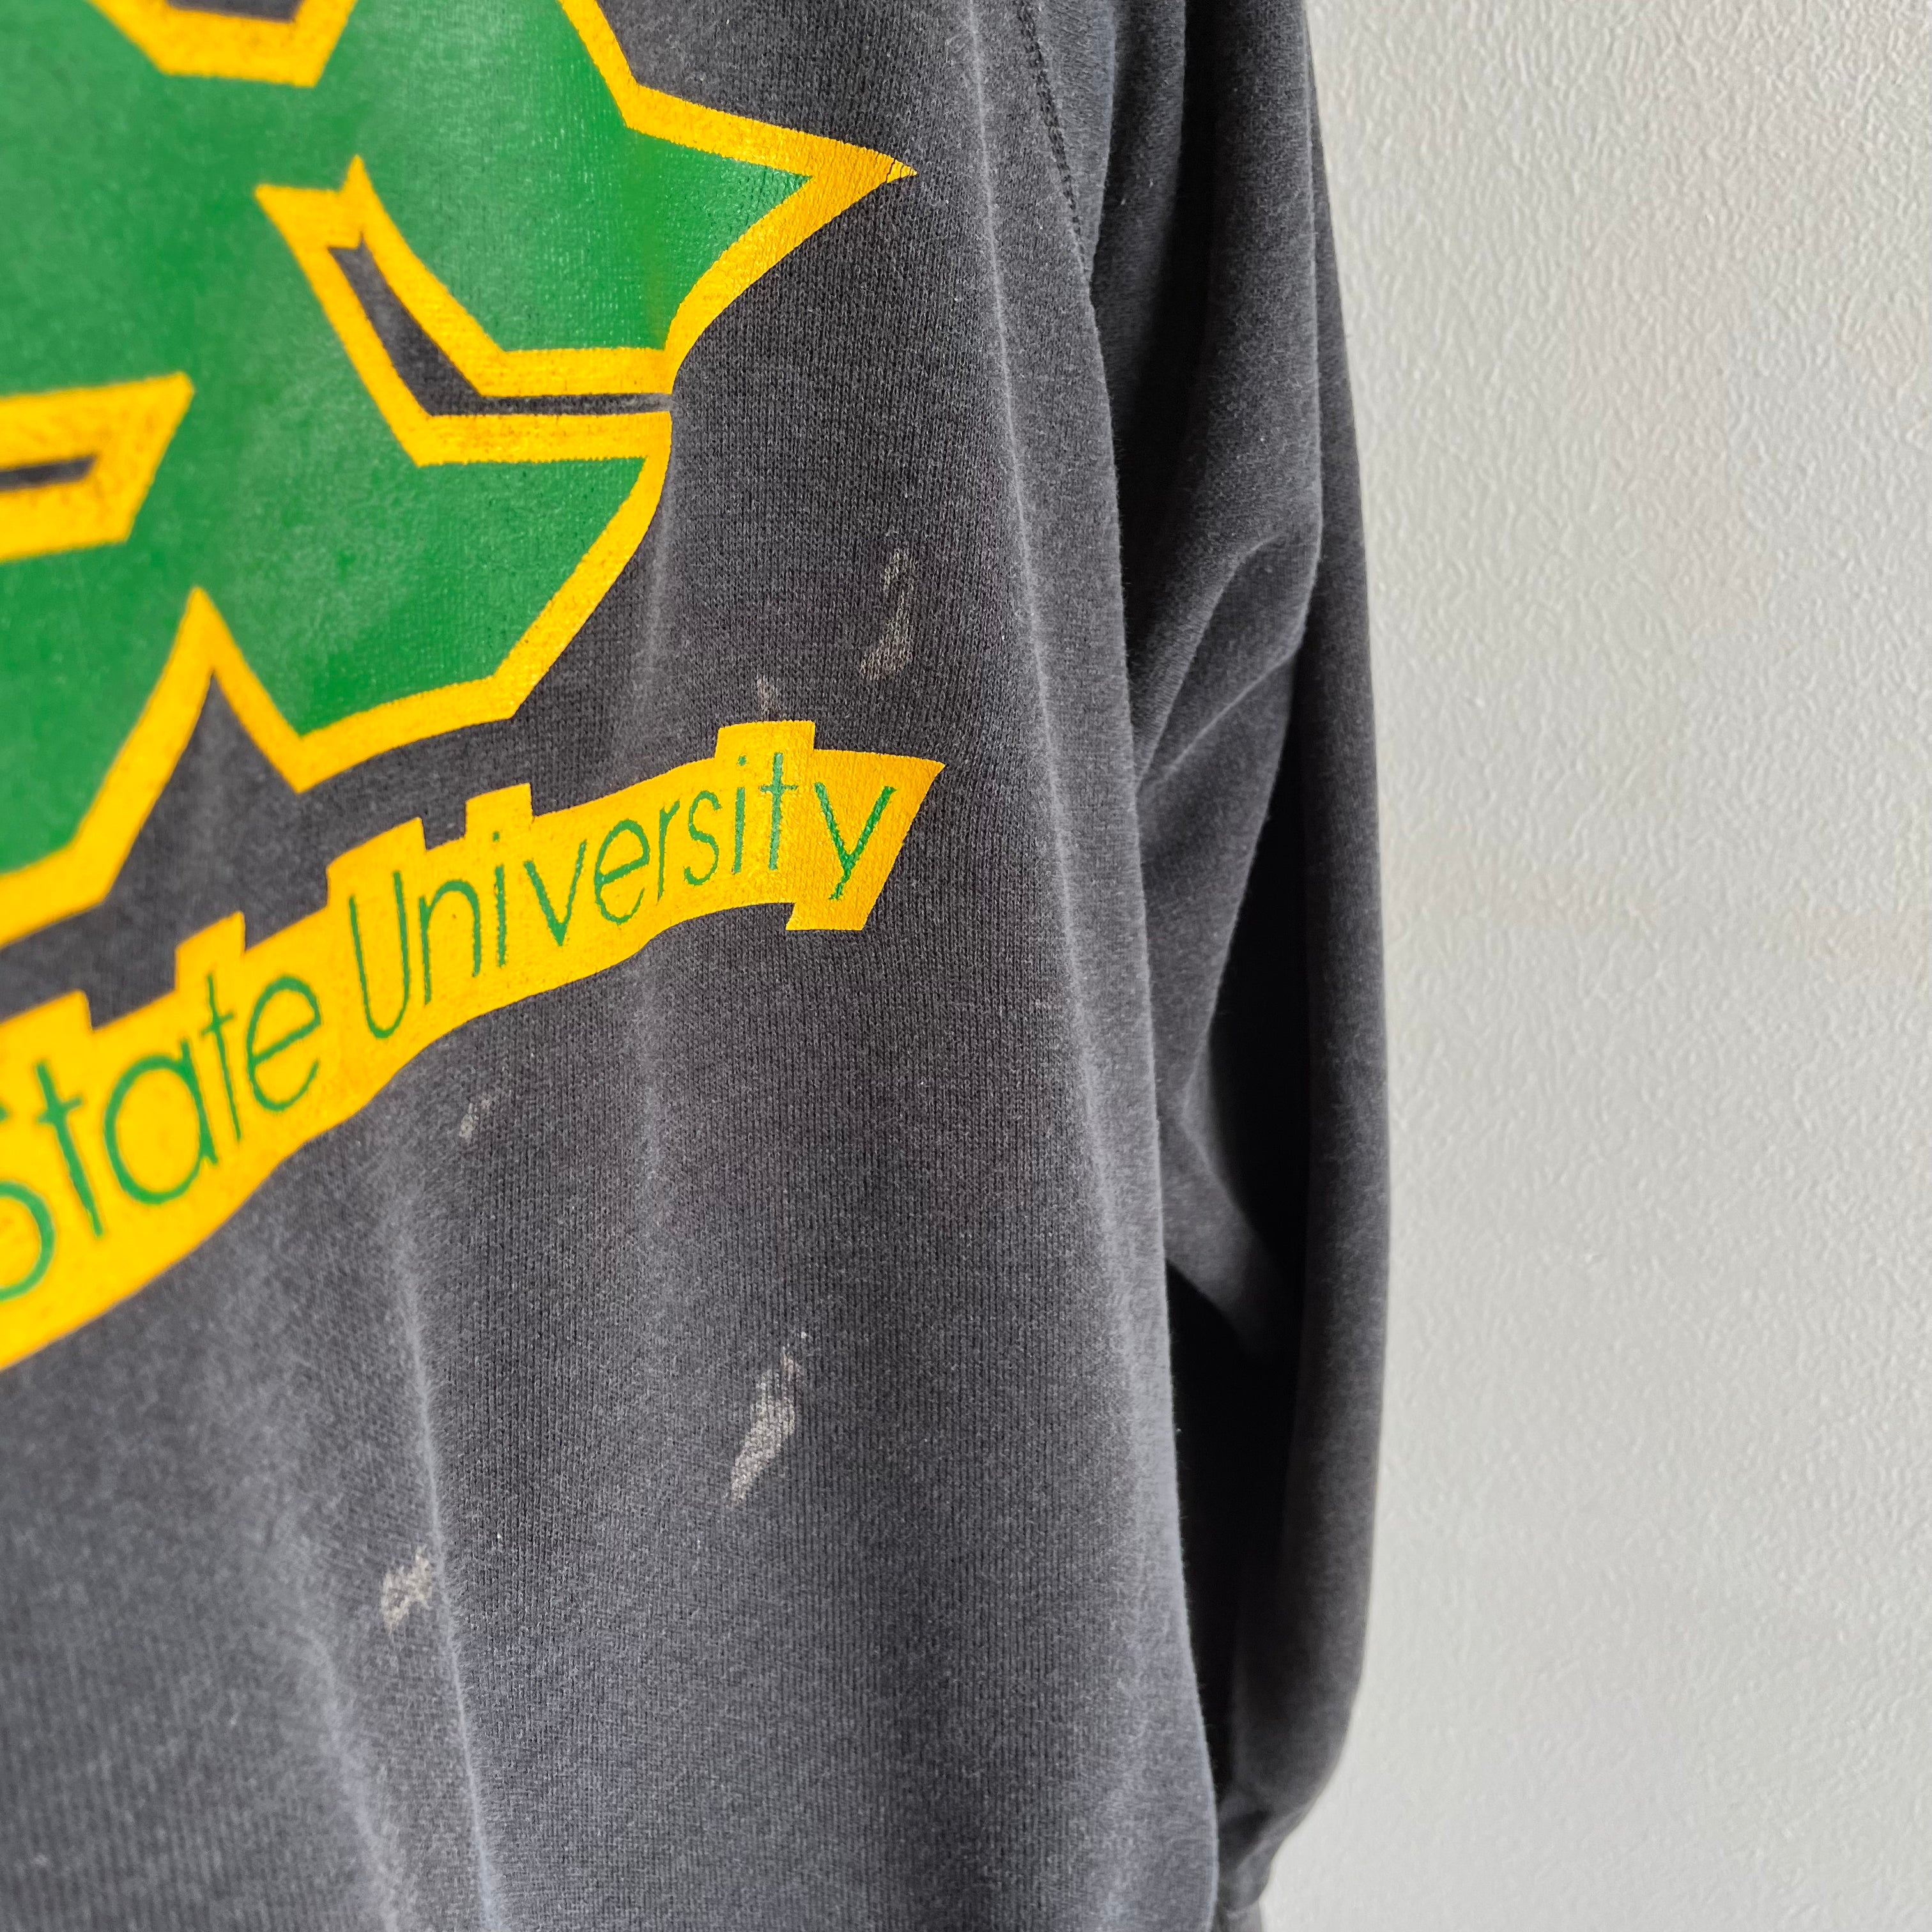 1980s Wayne State University Sweatshirt